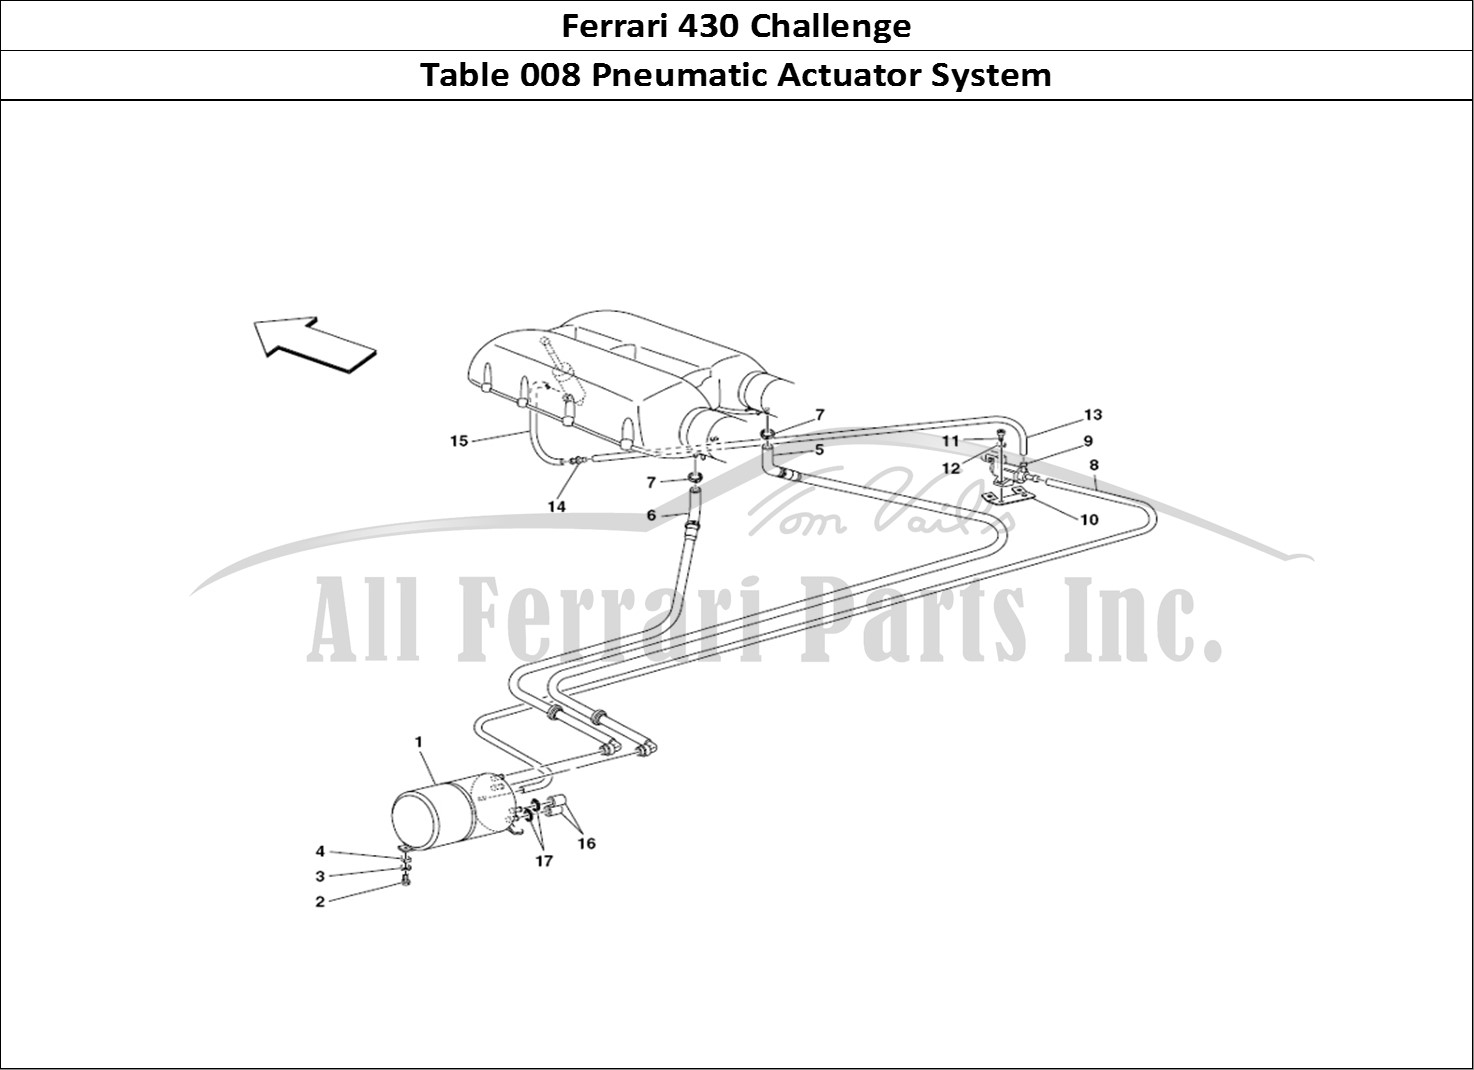 Ferrari Parts Ferrari 430 Challenge (2006) Page 008 Pneumatic actuator system